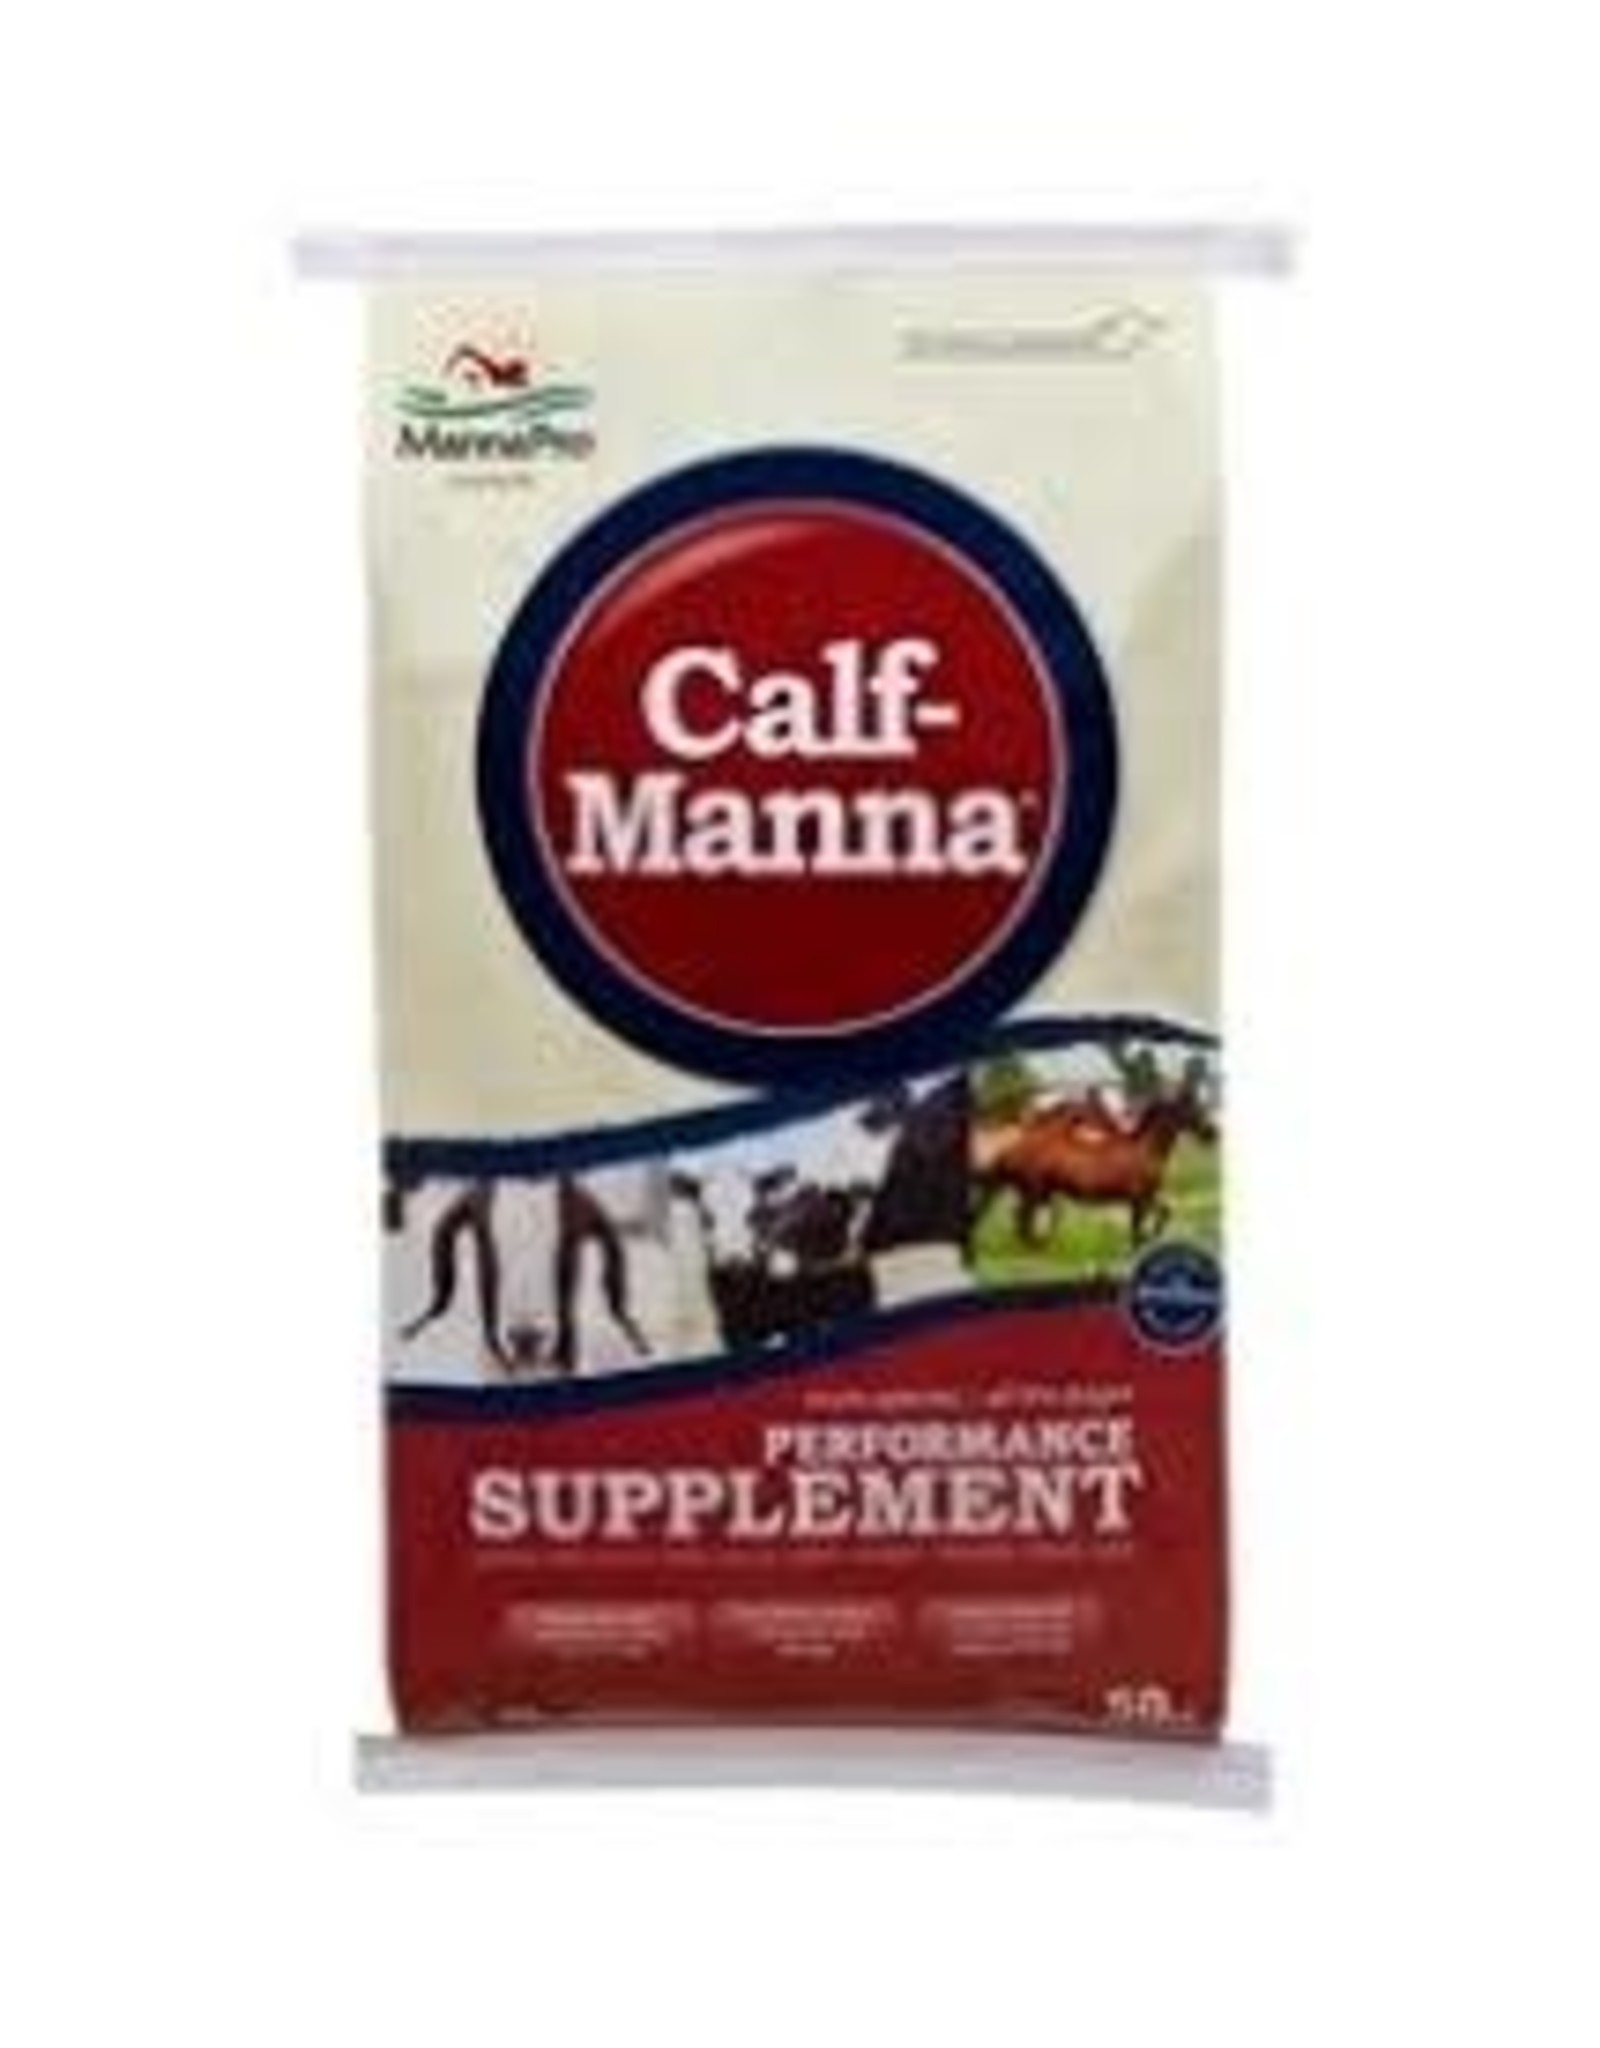 Manna Pro Manna Pro - Calf Manna 20 kg M1000  - NSC 0% - CP25%, Fat 3.0%, Fiber 3.0%  - Energy dense, high carbohydrate supplement - multiple species (C-CAN)